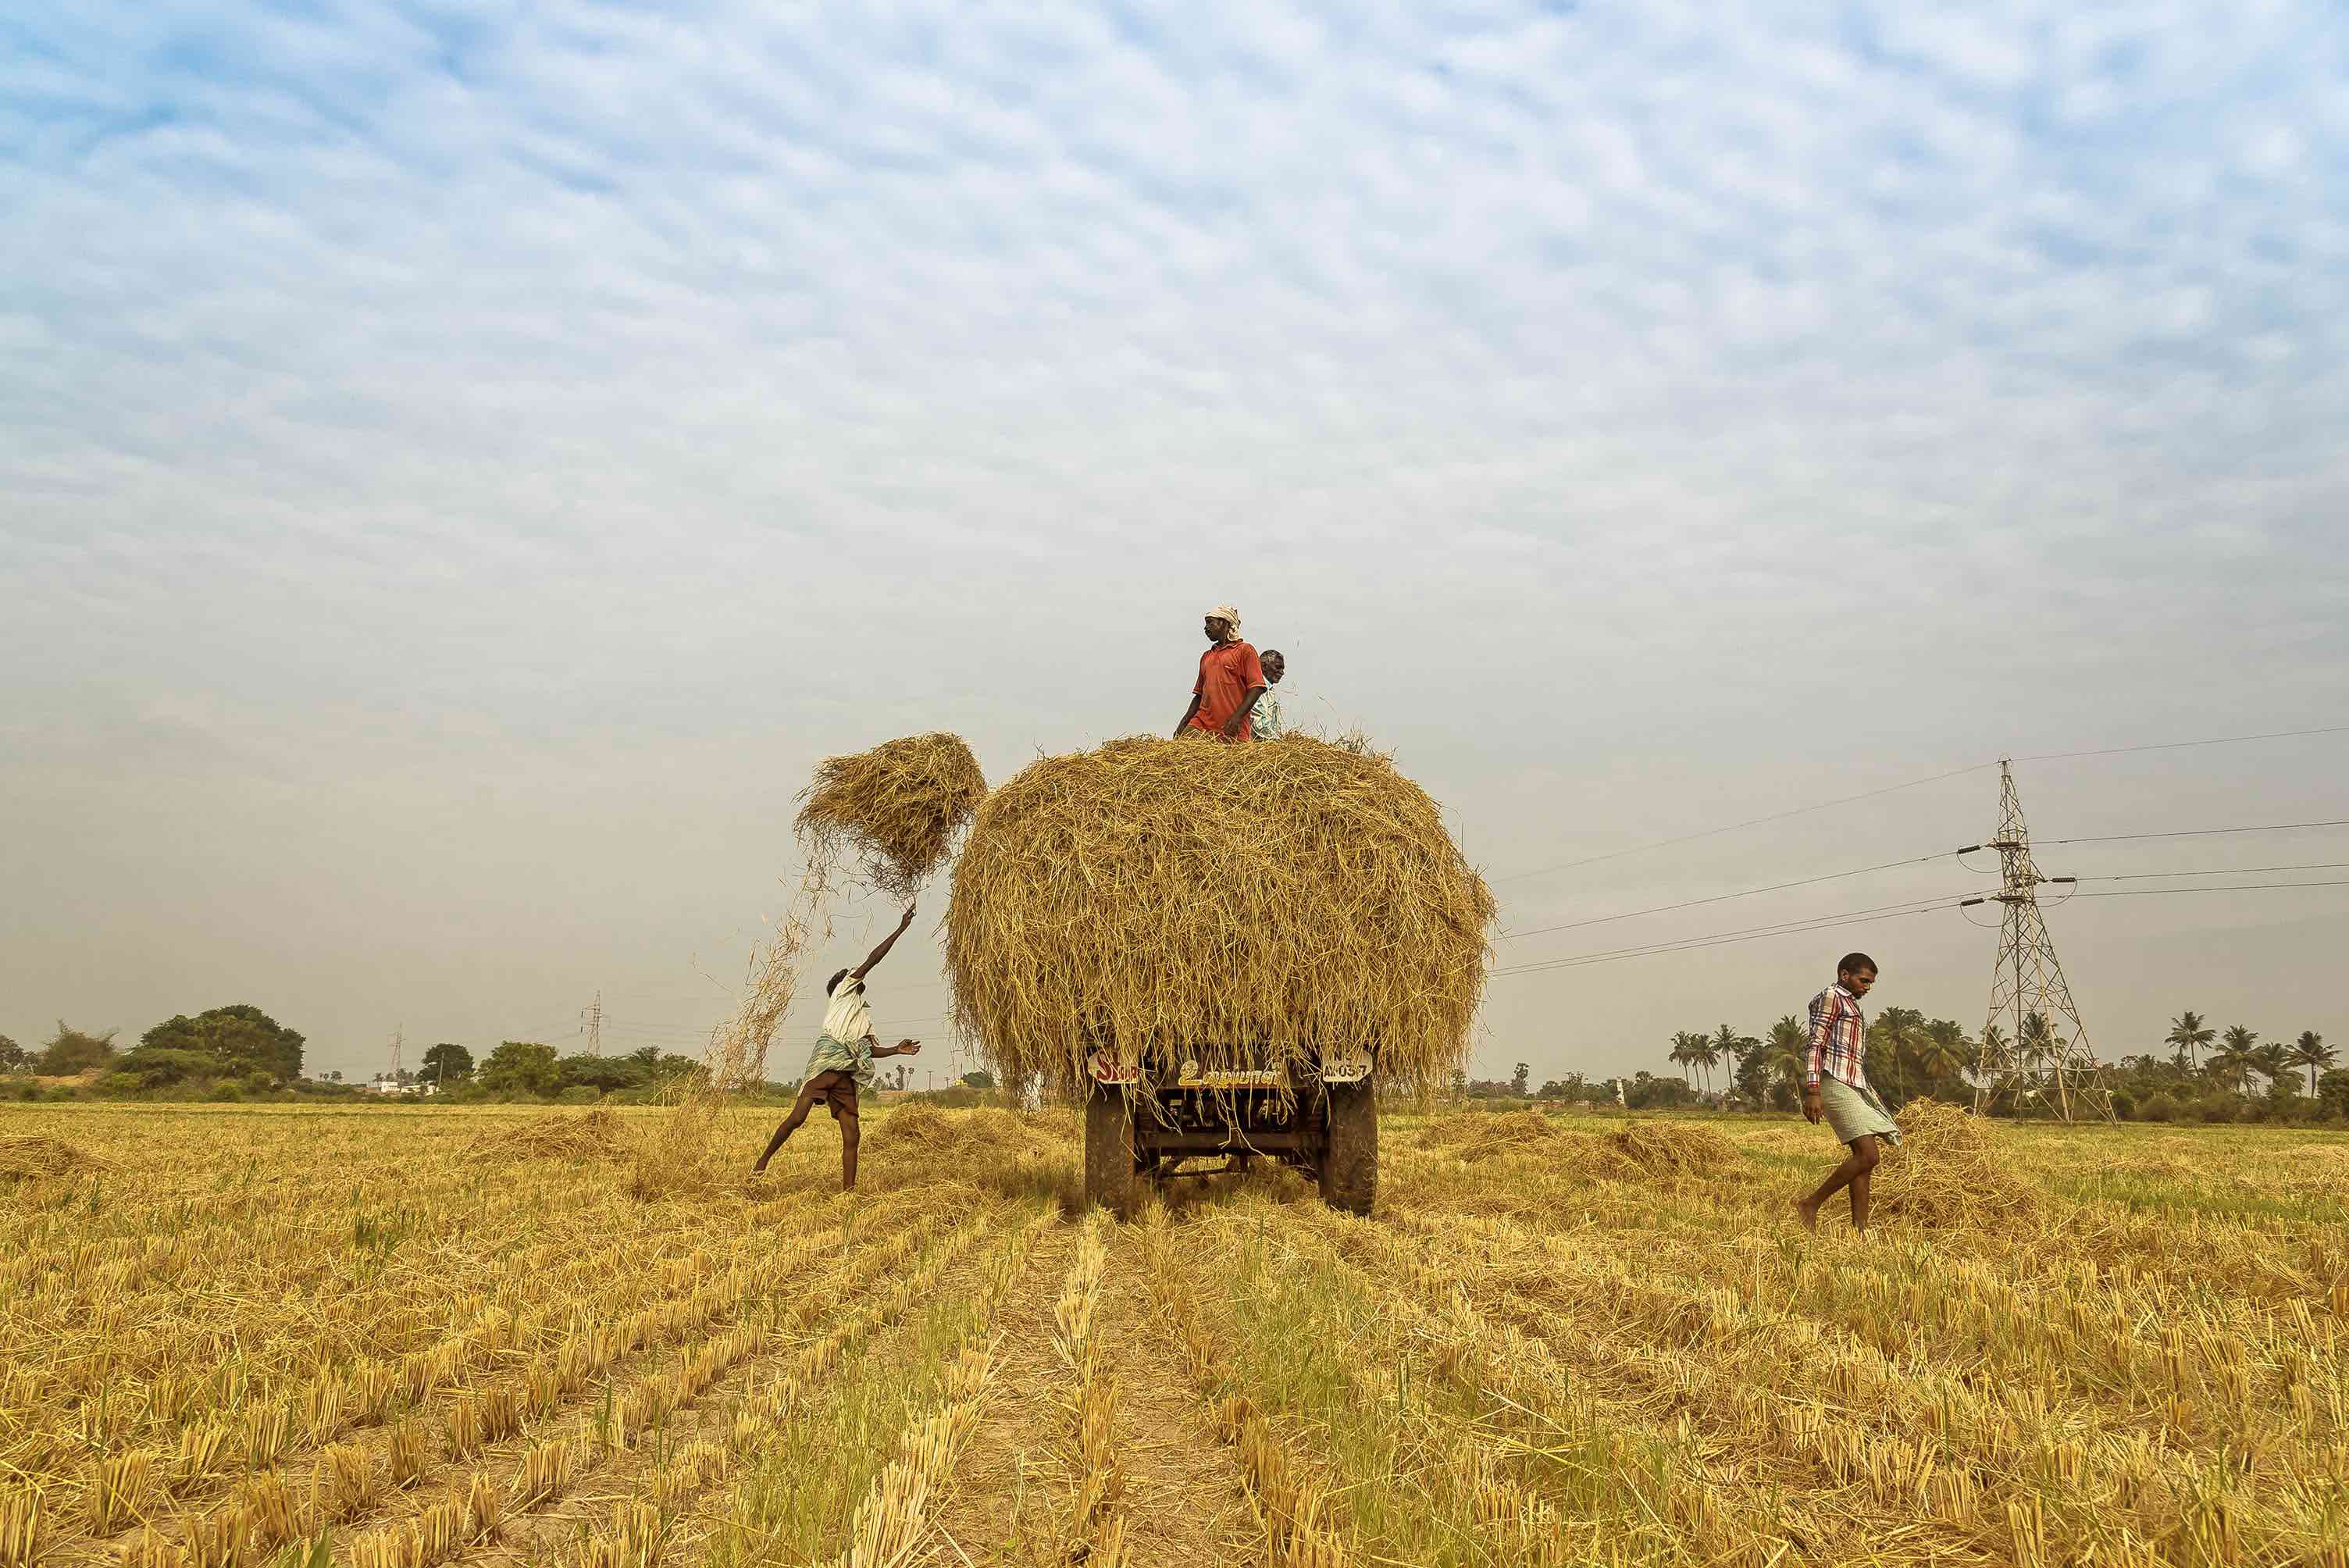 In northern india they harvest their wheat. Сельское хозяйство. Сельское хозяйство Индии. Традиционное сельское хозяйство. Сбор пшеницы в Индии.